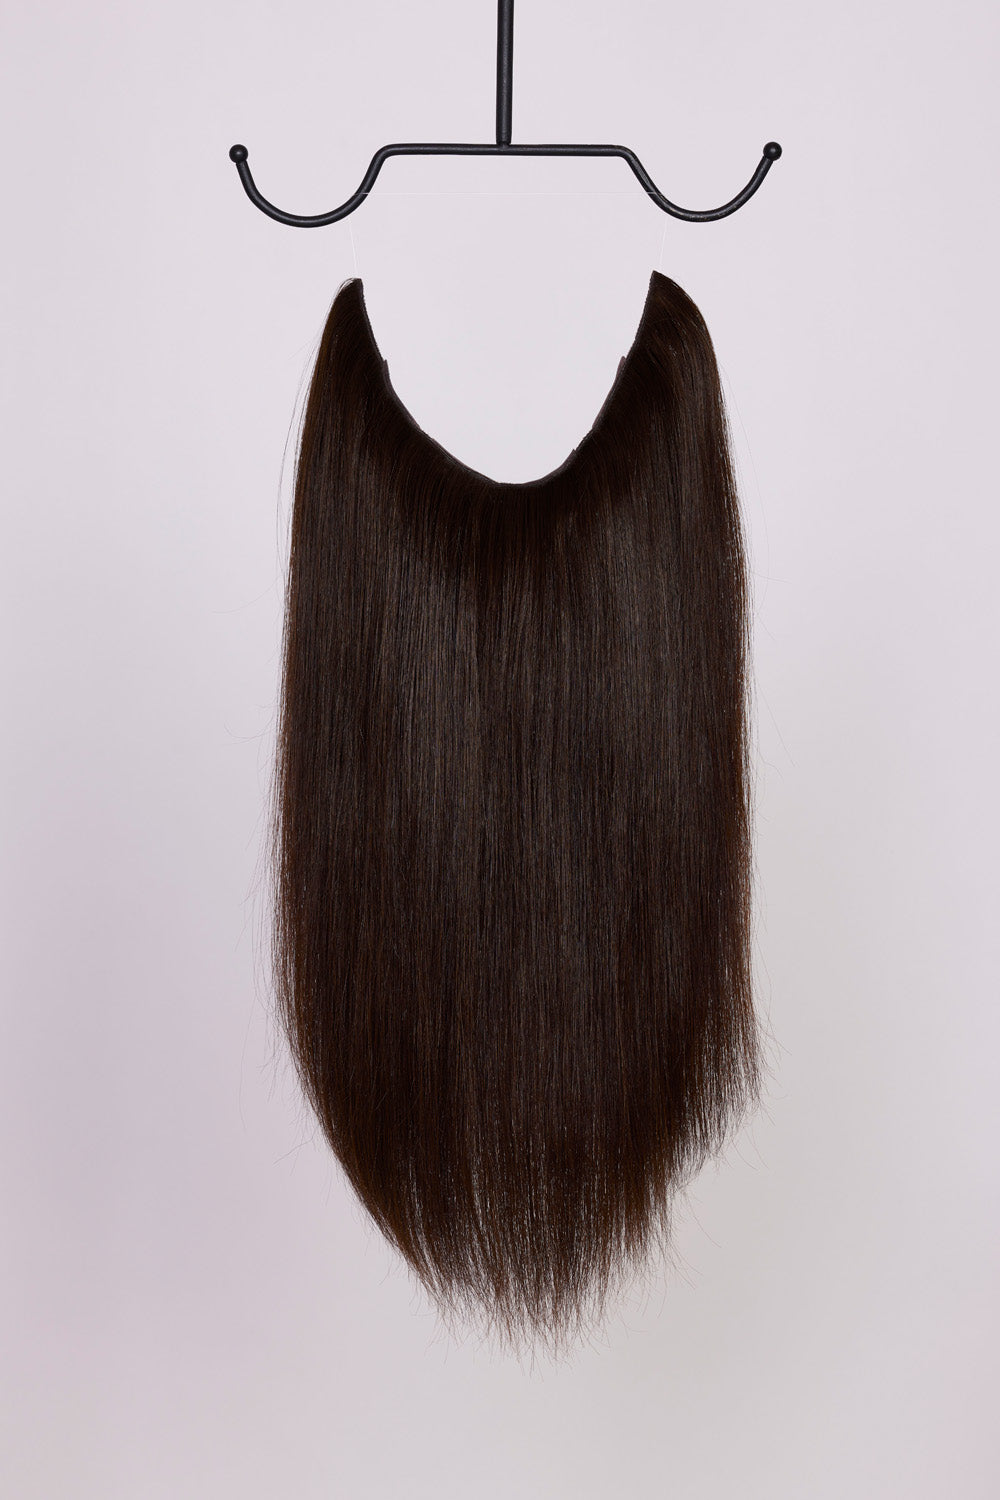 BHBD Hairband dark brown 40 cm.100% Remy hair. Clip-in, halo, or ponytail.